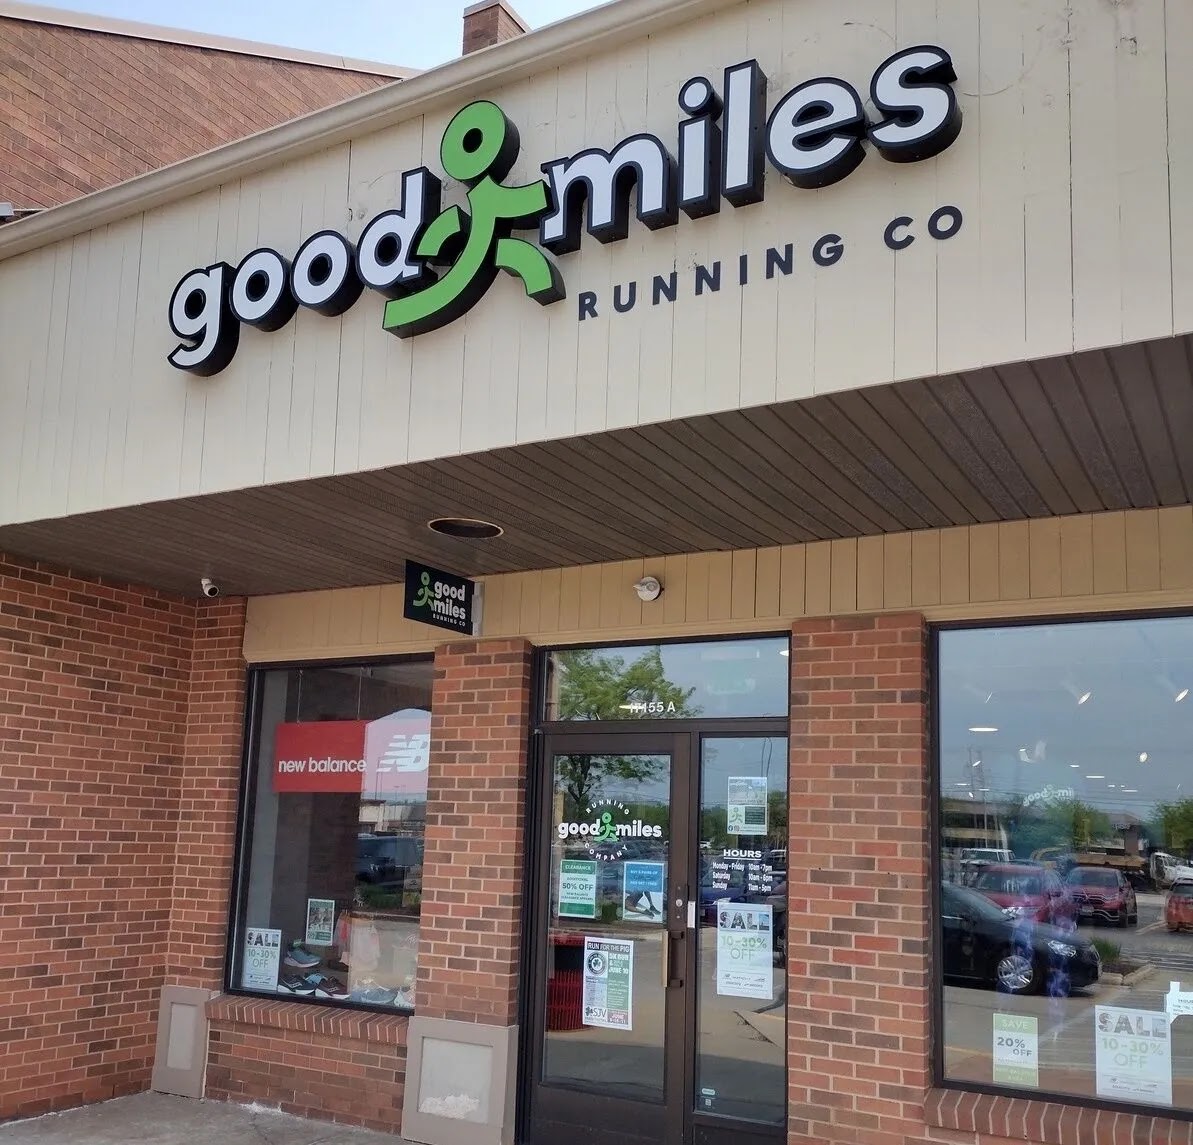 Goodmiles Running Company